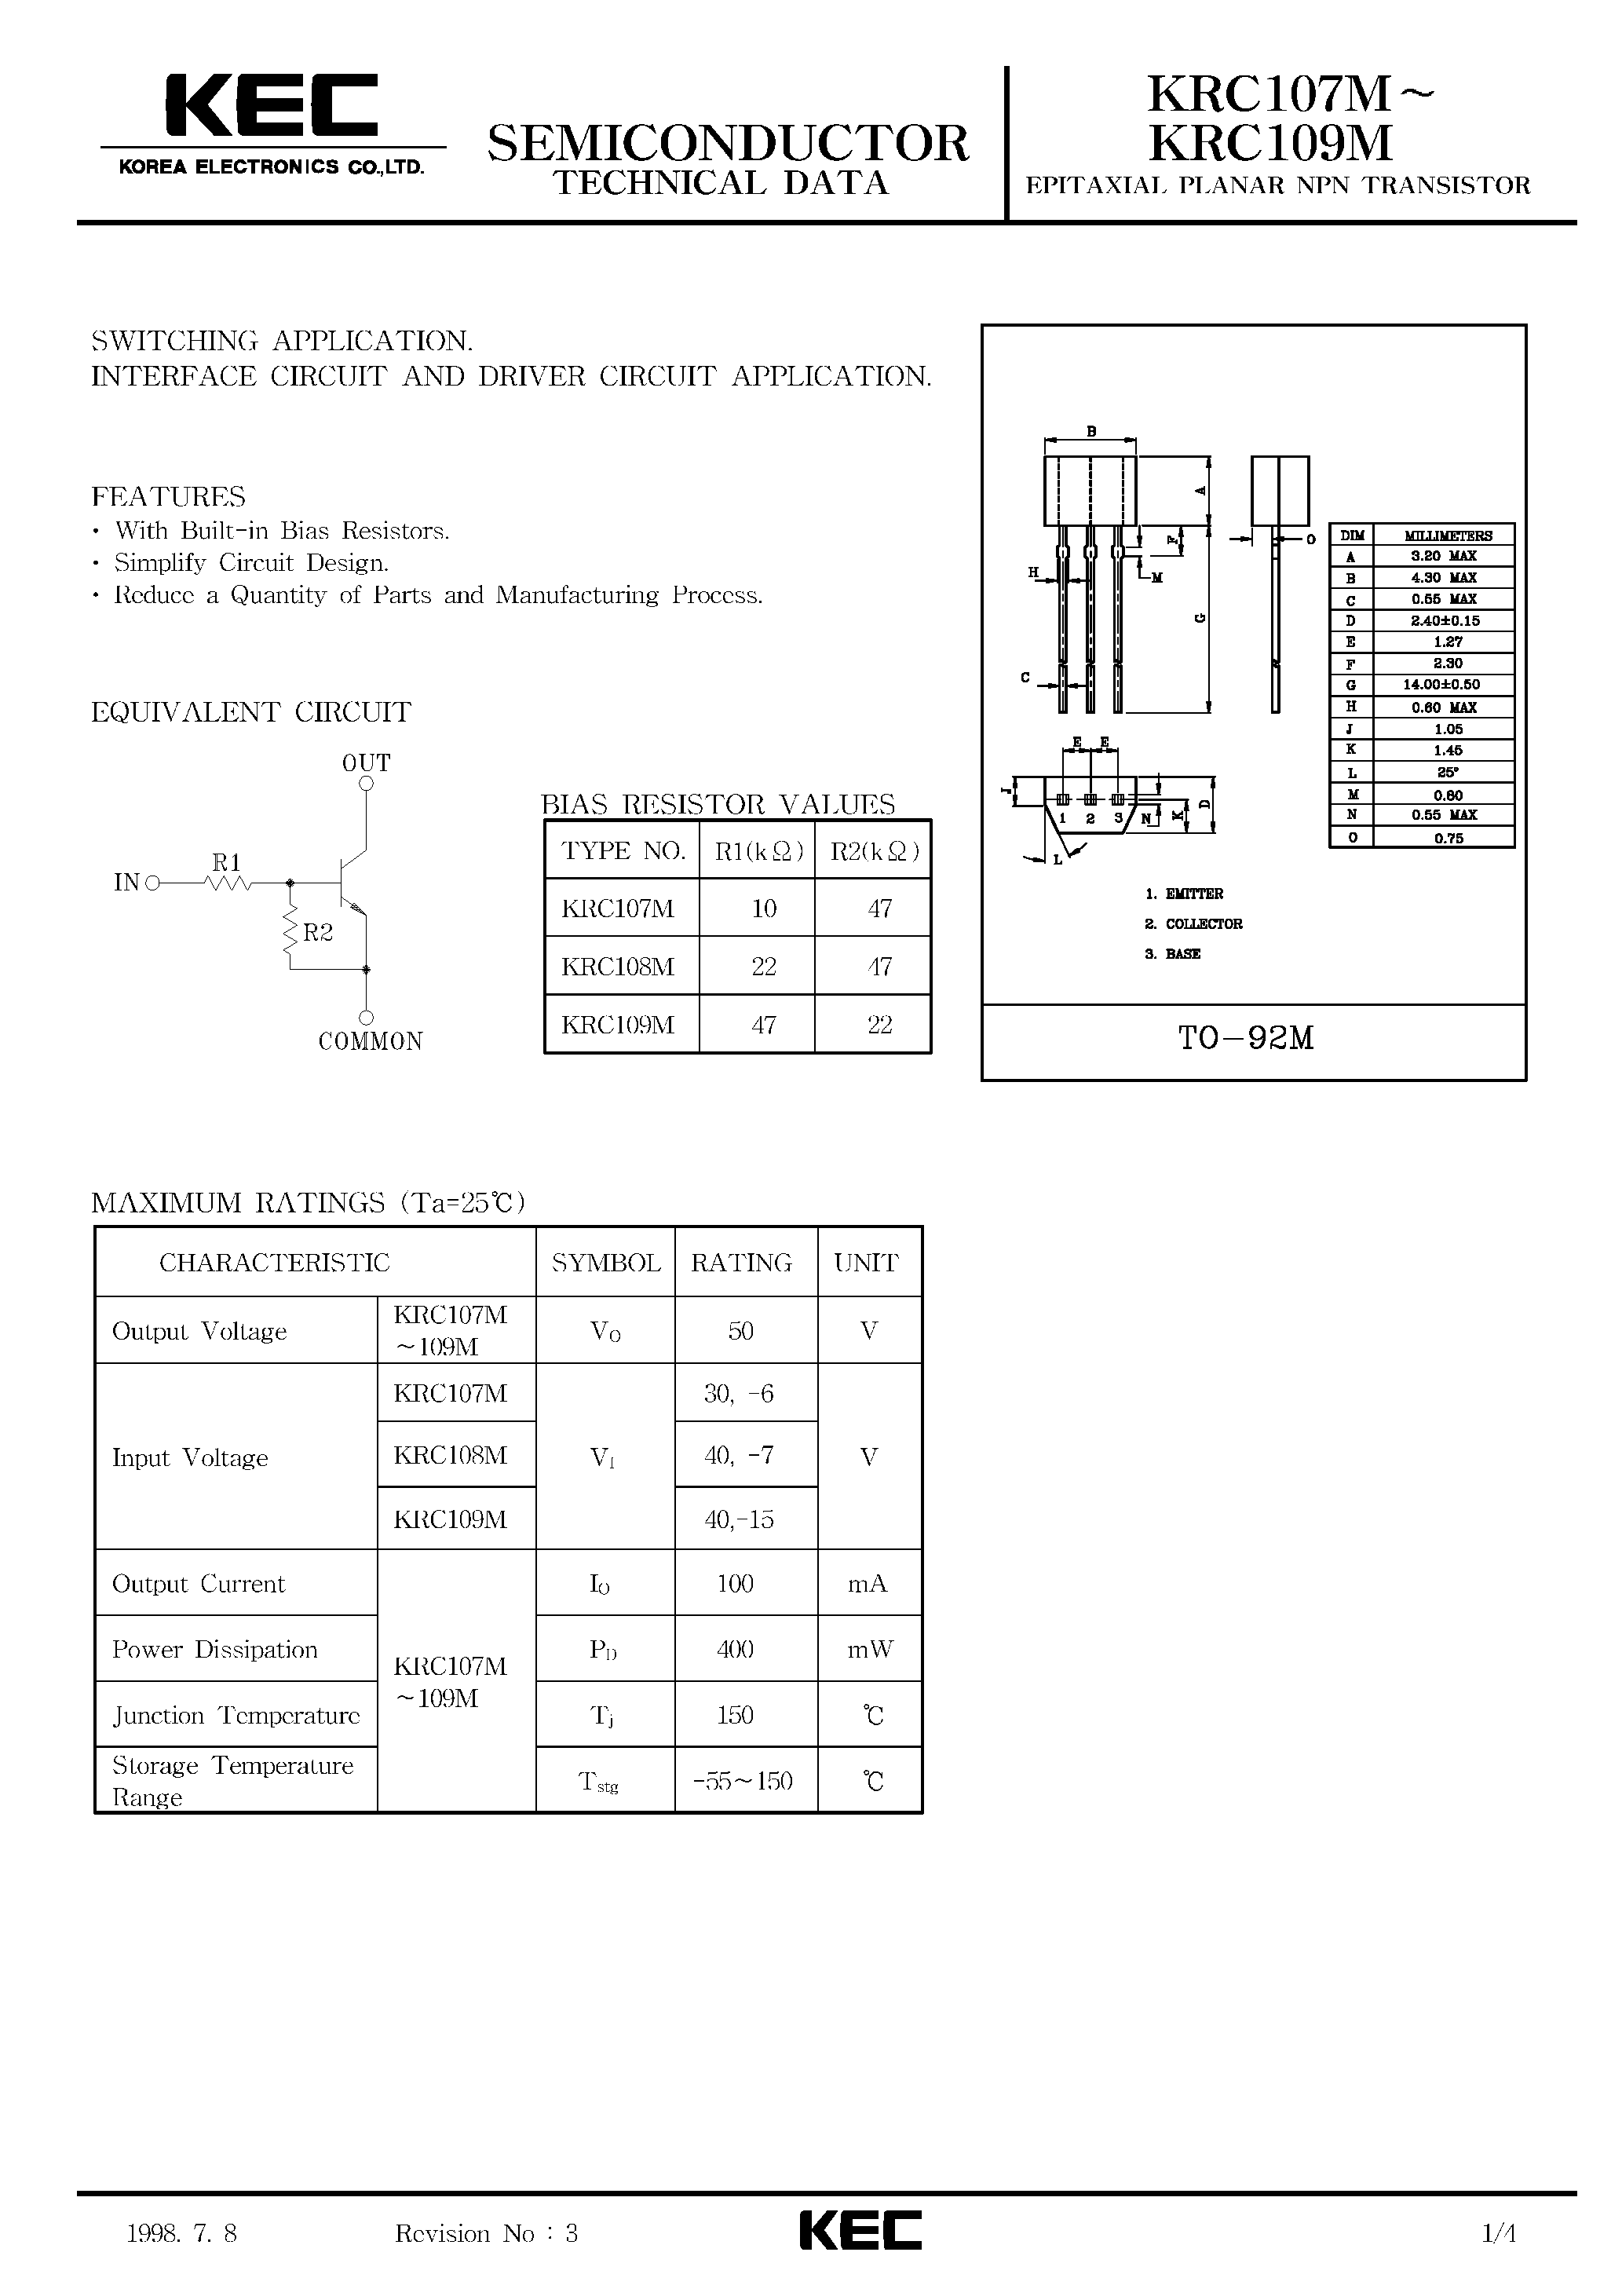 Datasheet KRC107M - (KRC107M - KRC109M) EPITAXIAL PLANAR PNP TRANSISTOR page 1